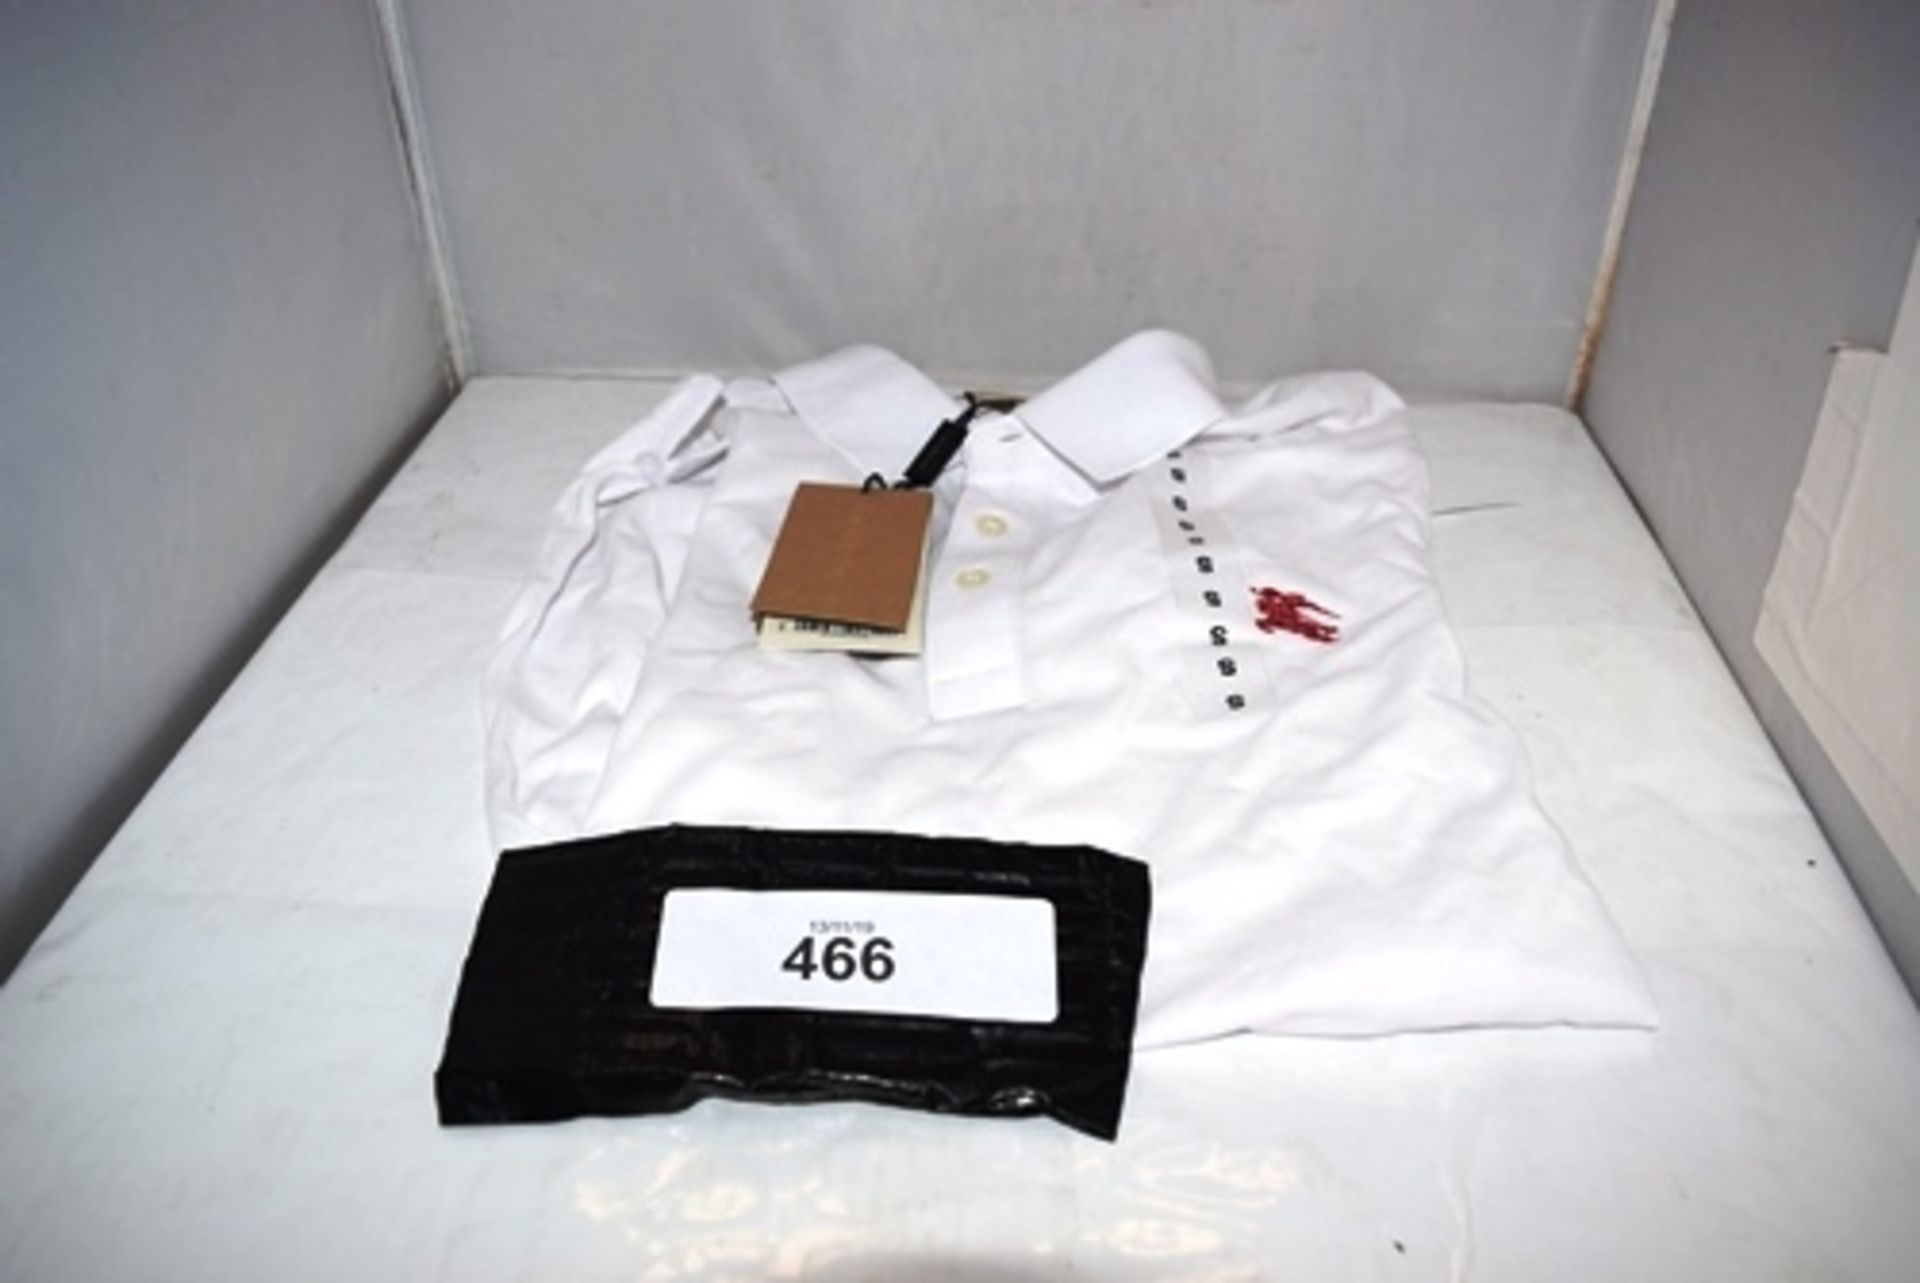 1 x men's Wheeler white polo shirt, size small, RRP £125.00 - New (C14A)